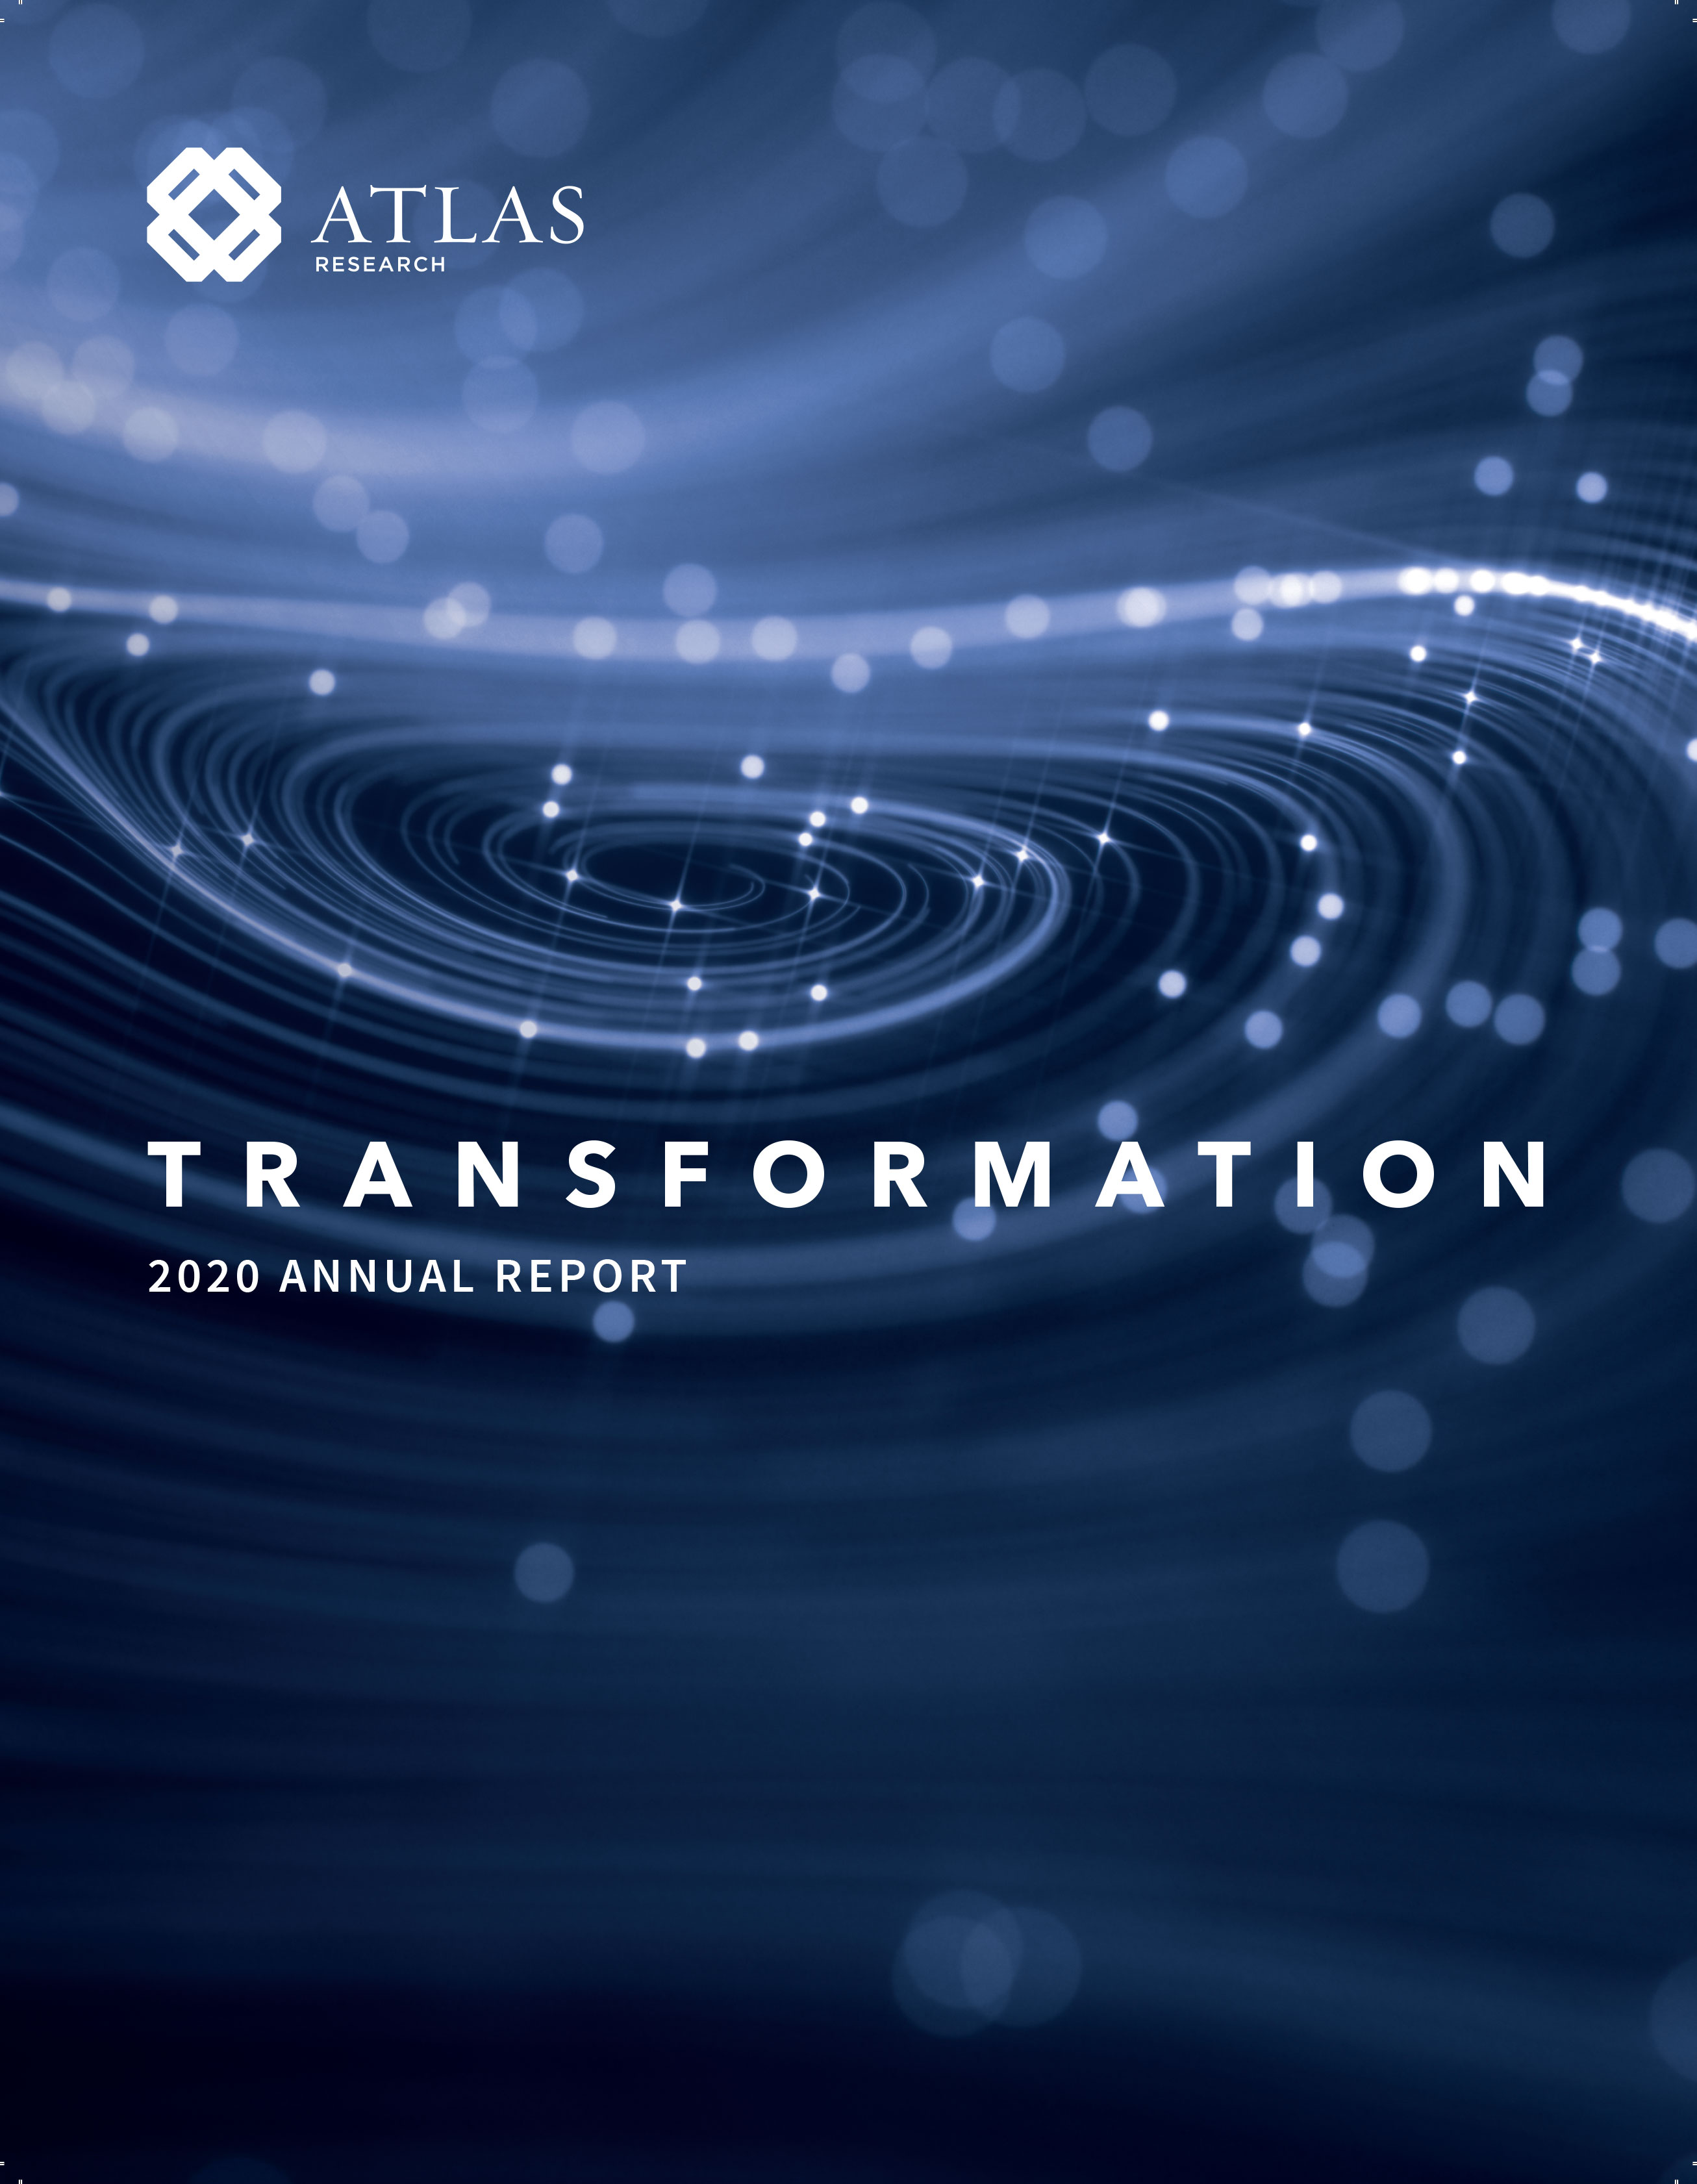 Atlas Research Annual Report 2020